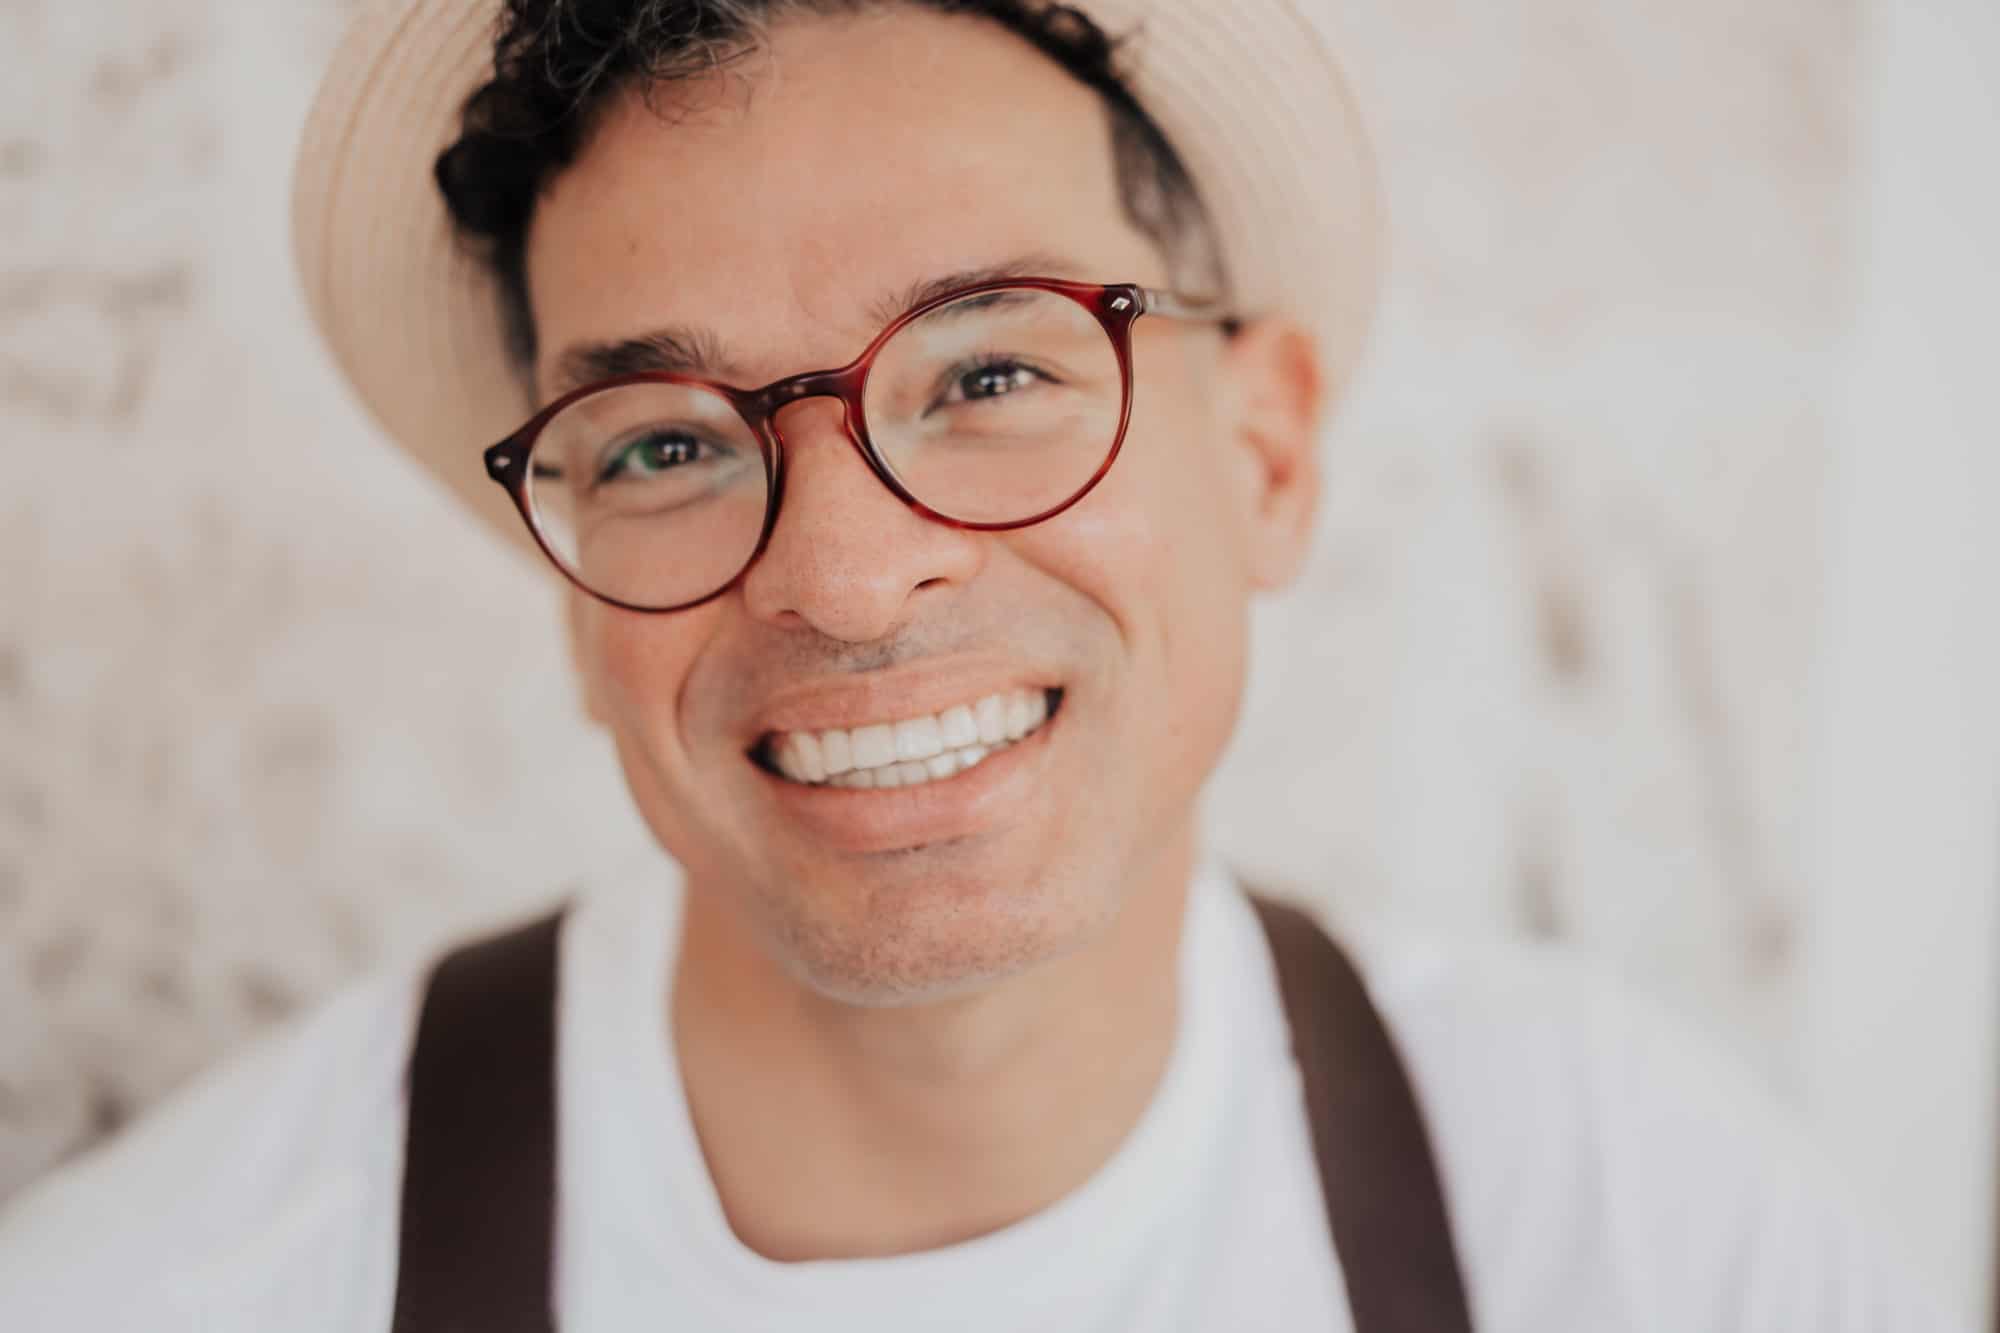 A portrait photo of a smiling man